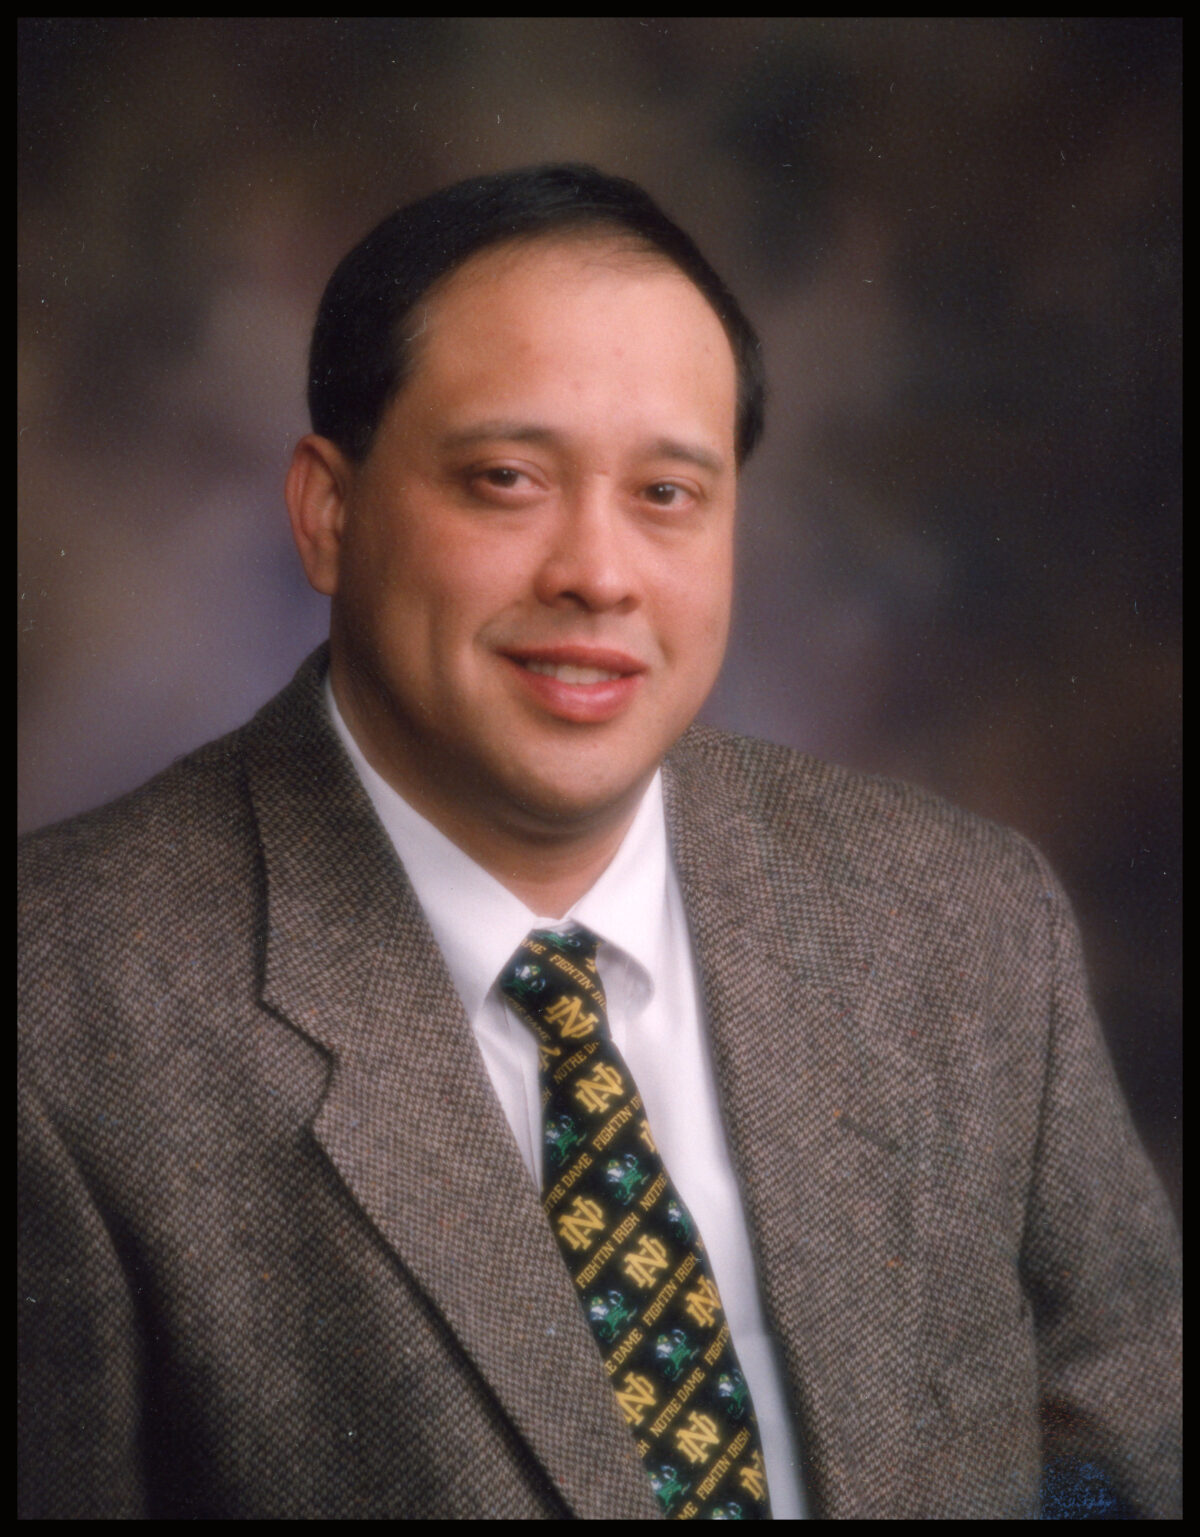 J. P. Buellesfeld, President of Buellesfeld Financial Services, Incorporated.